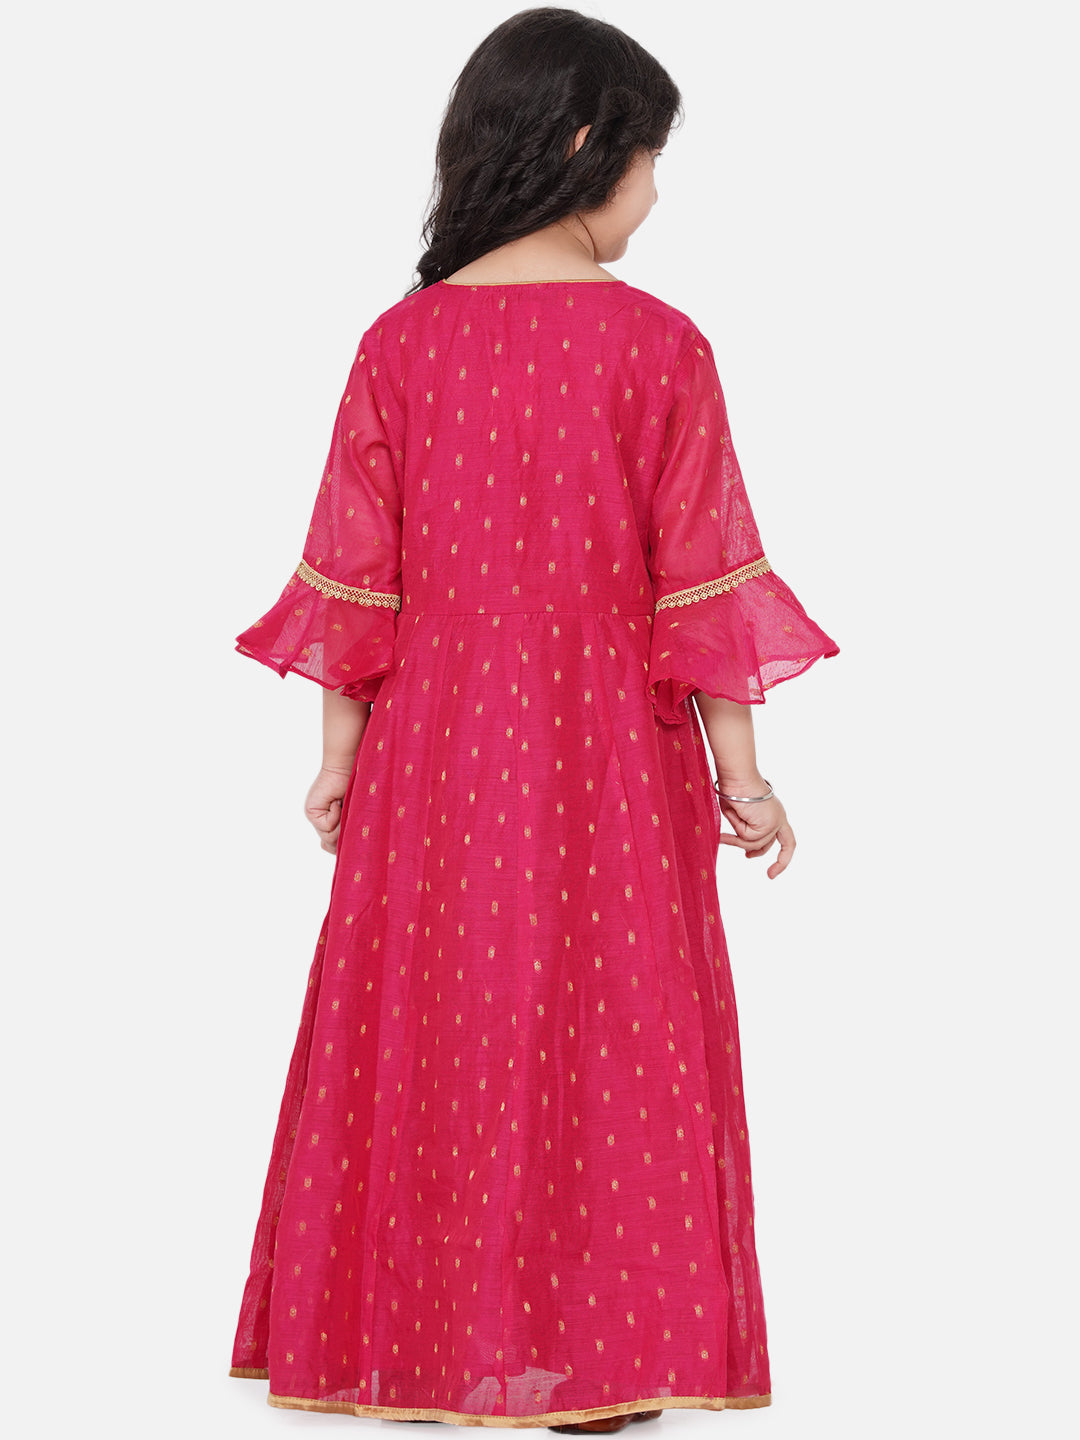 Bitiya By Bhama Girls Pink Bell Sleeves Ethnic Maxi Dress